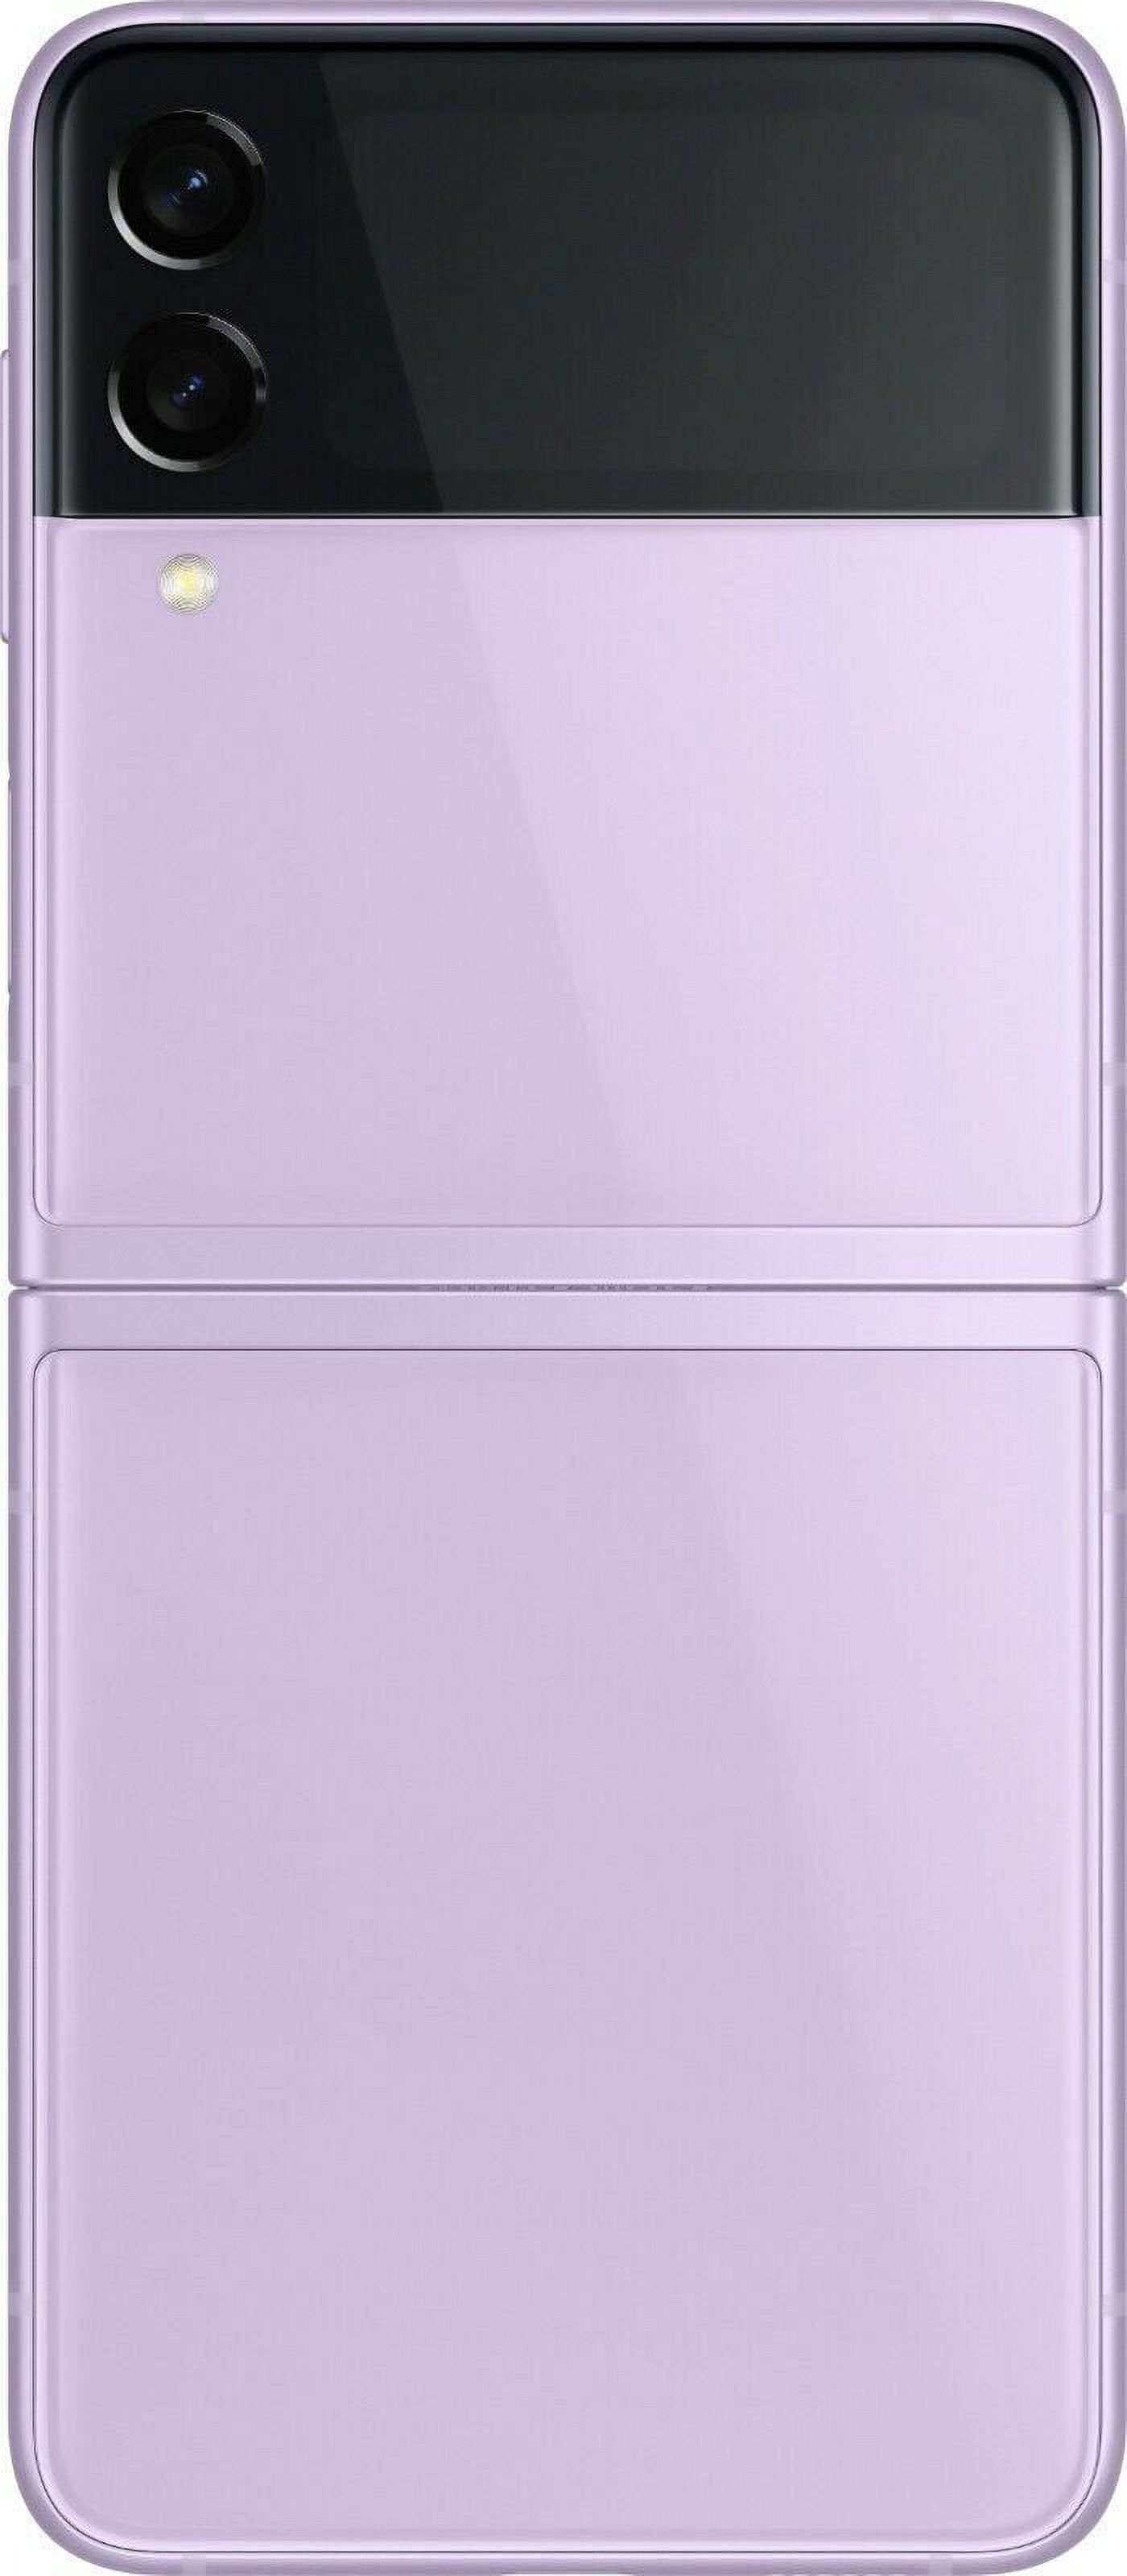 Samsung Galaxy Z Flip 3 5G SM-F711U1 256GB Purple (US Model) - Factory Unlocked Cell Phone - Very Good Condition - image 2 of 3